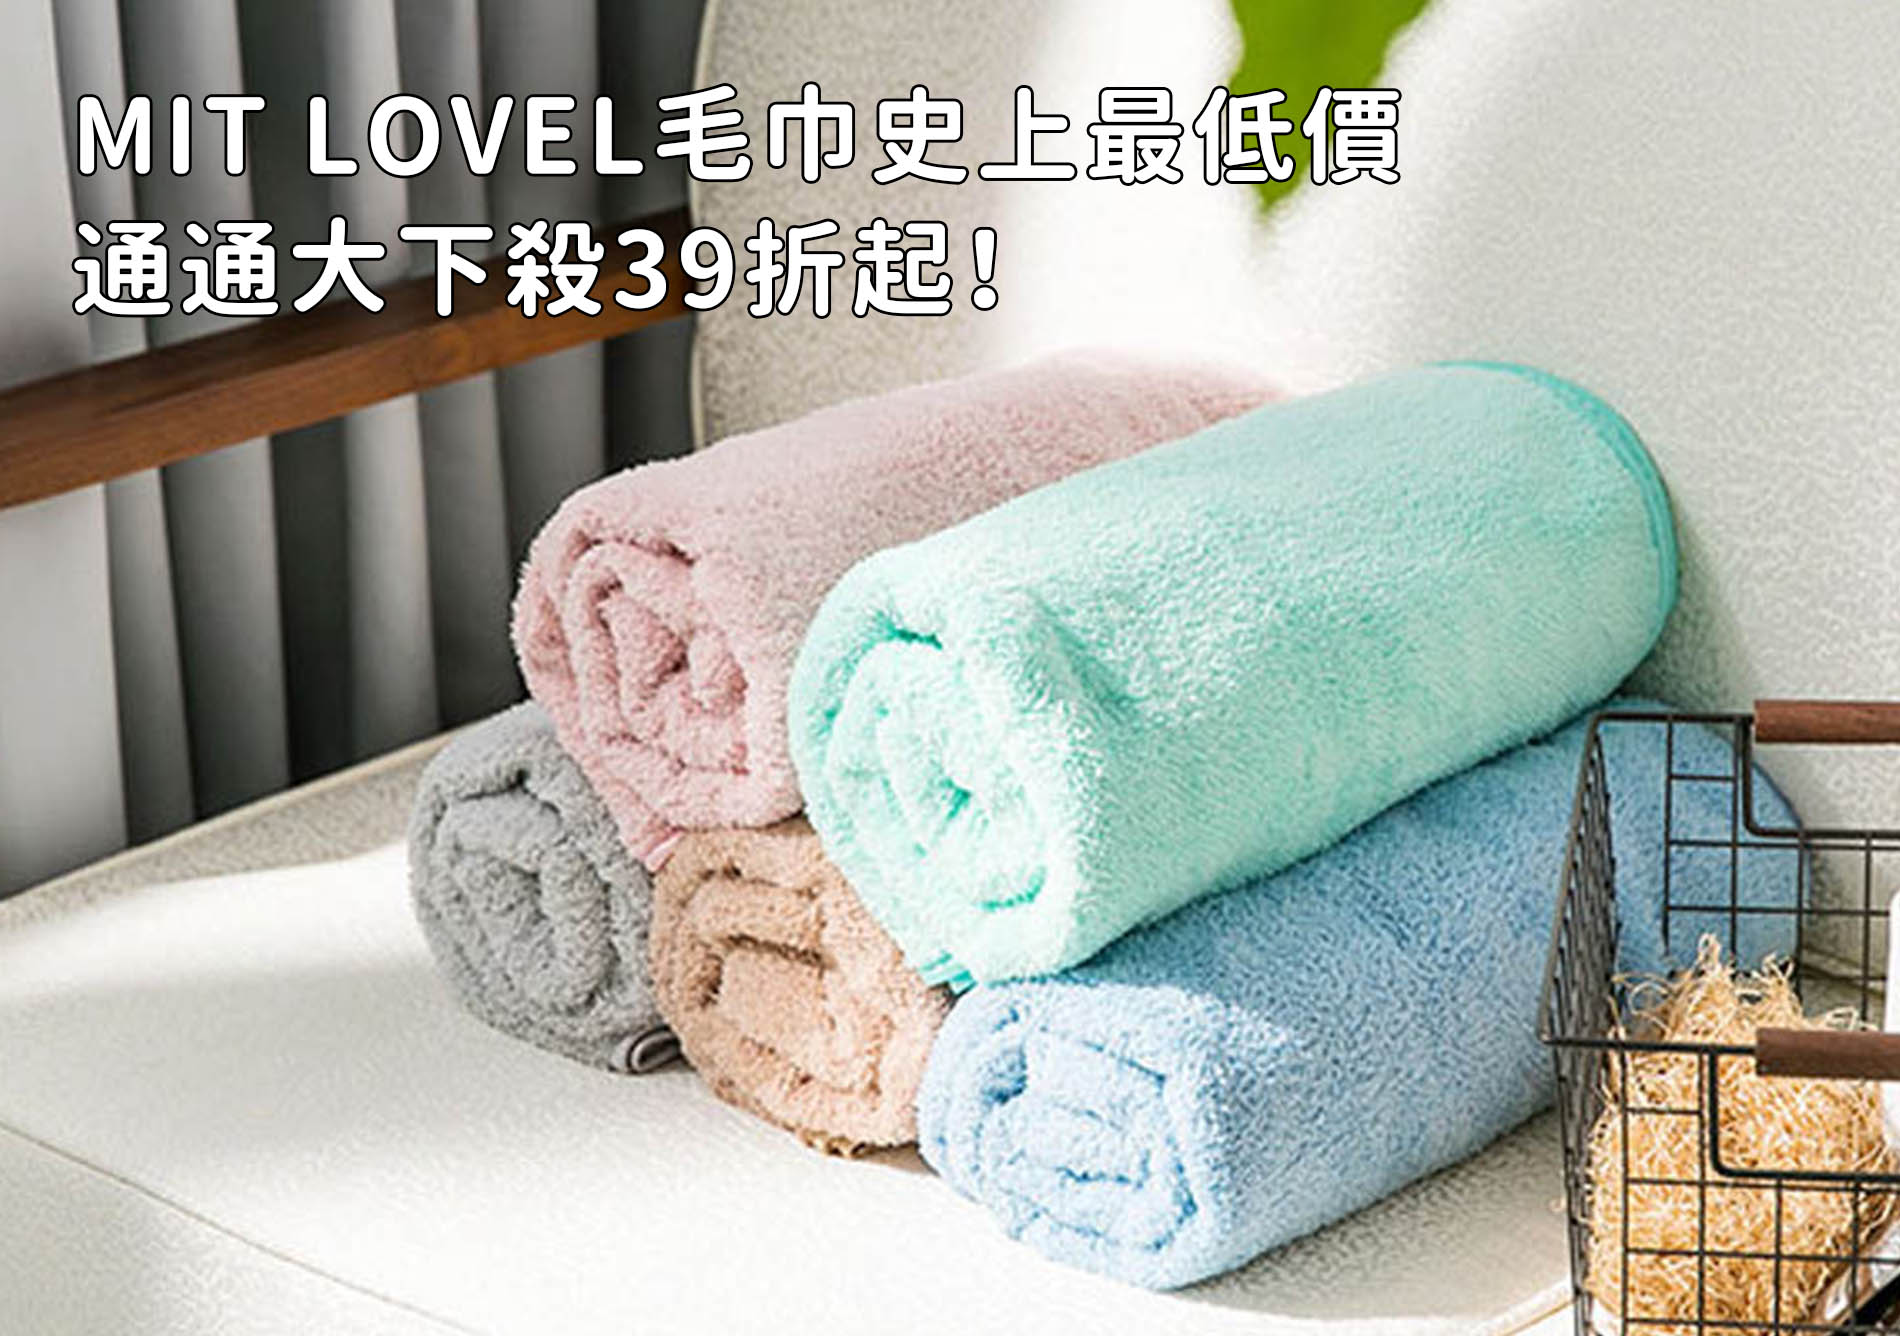    MIT LOVEL毛巾史上最低價 通通大下殺39折起！	